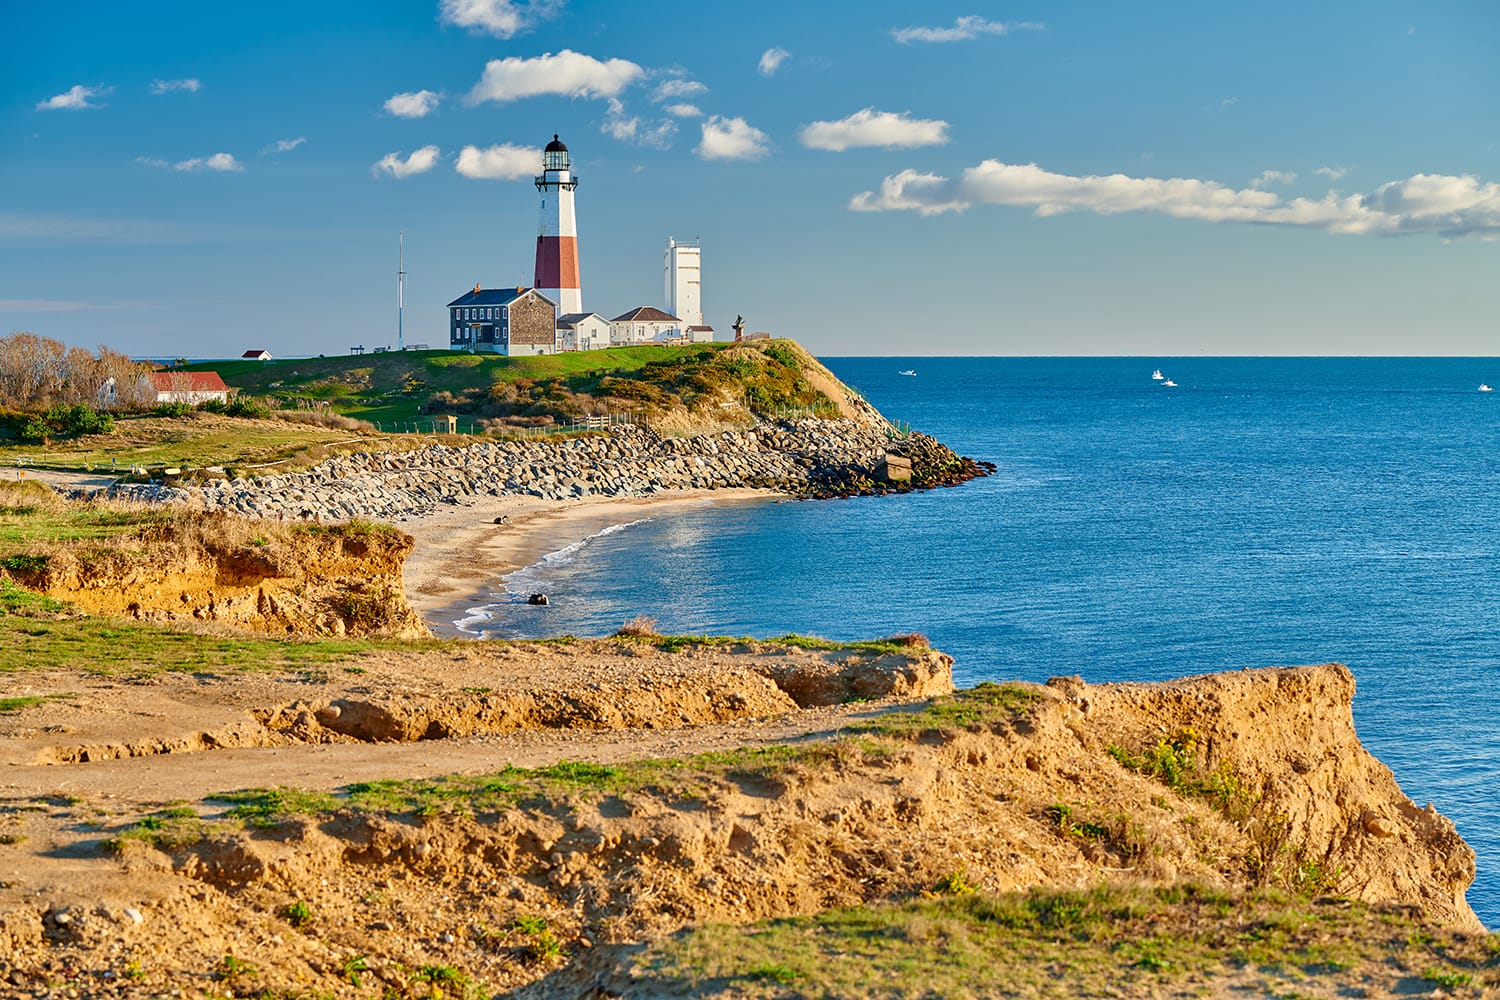 Montauk Lighthouse and beach, Long Island, New York, USA